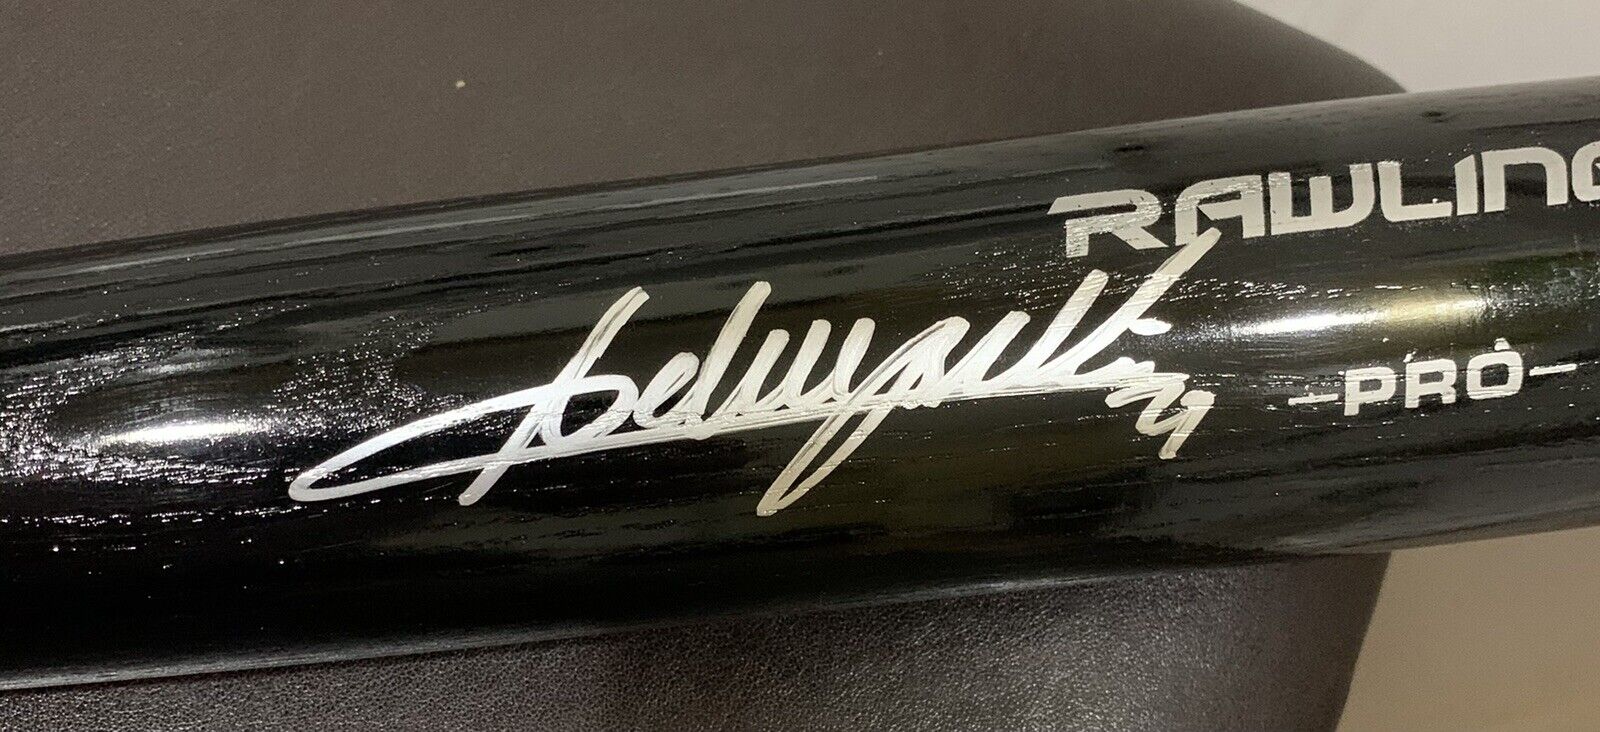 Adrian Beltre 🔥🔥 Autographed Baseball Bat Rare No Reserve PSA/DNA Cert